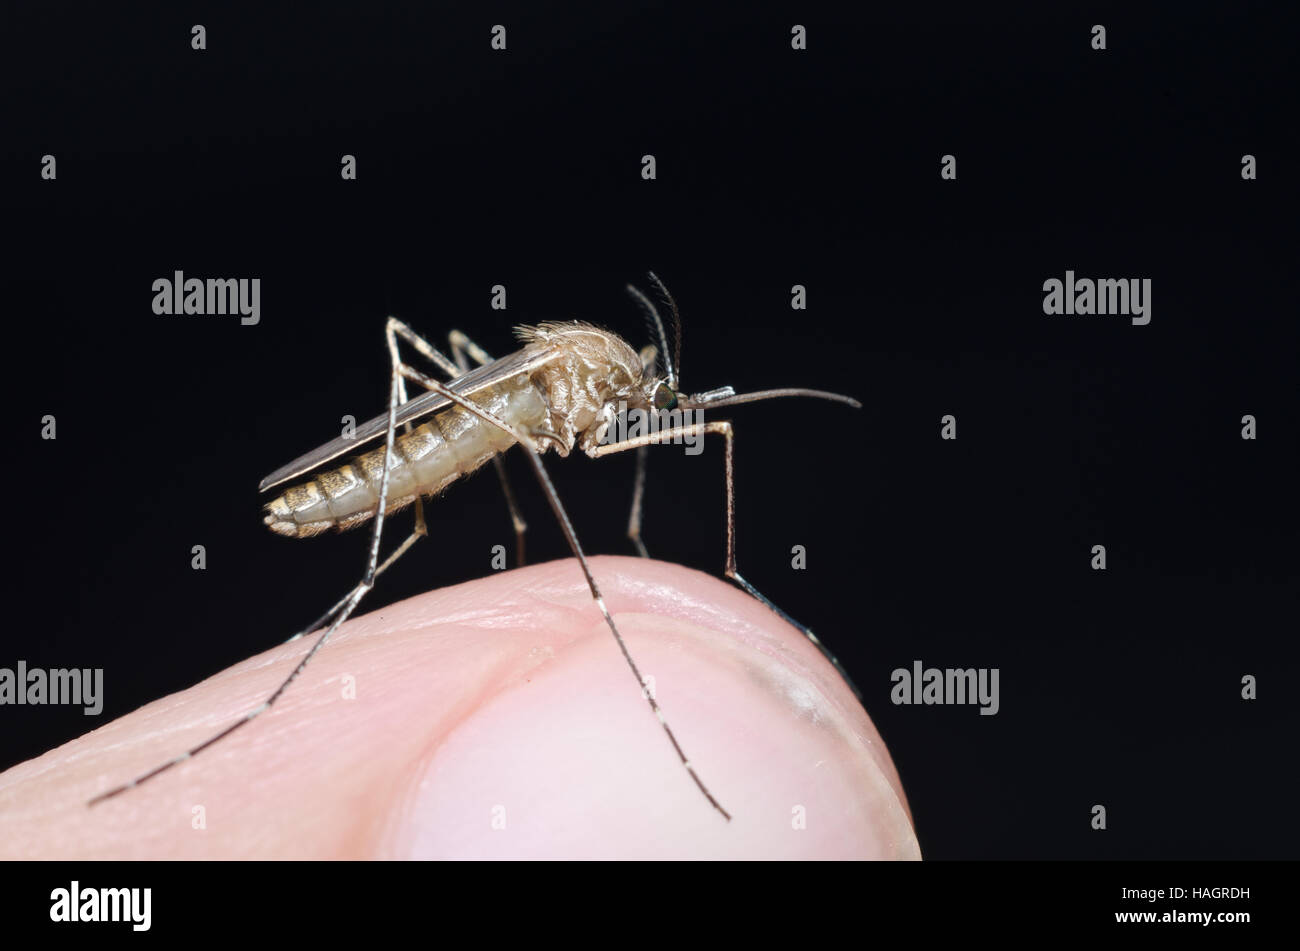 Common house mosquito (Culex pipiens) preparing for bite human skin Stock Photo